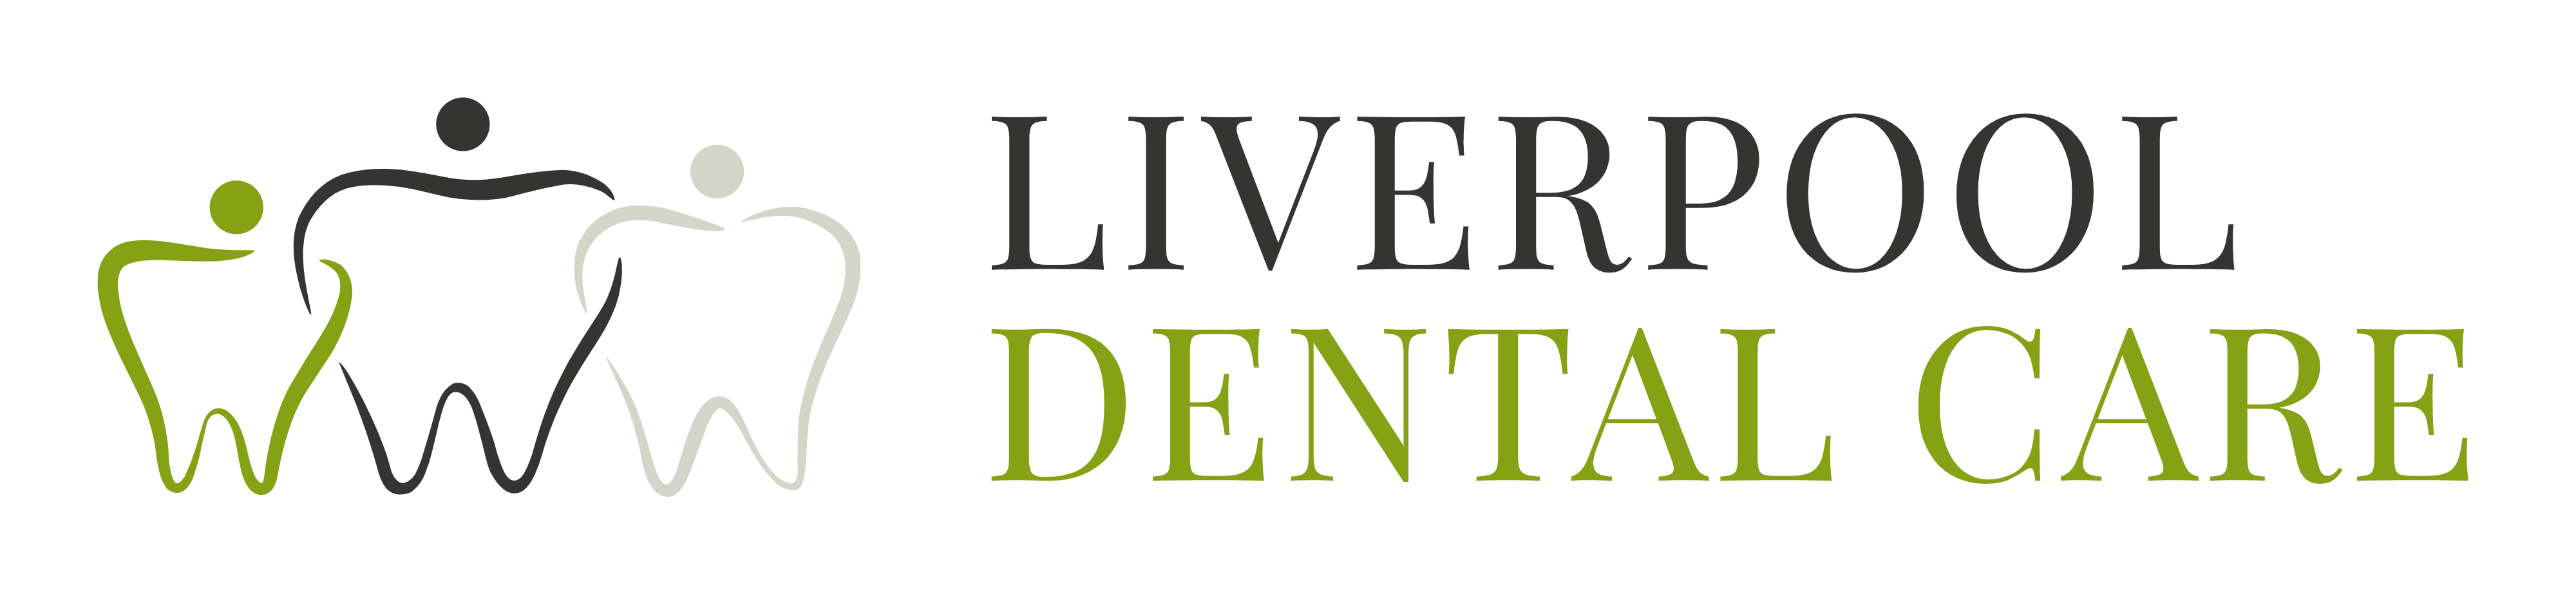 Liverpool dental care